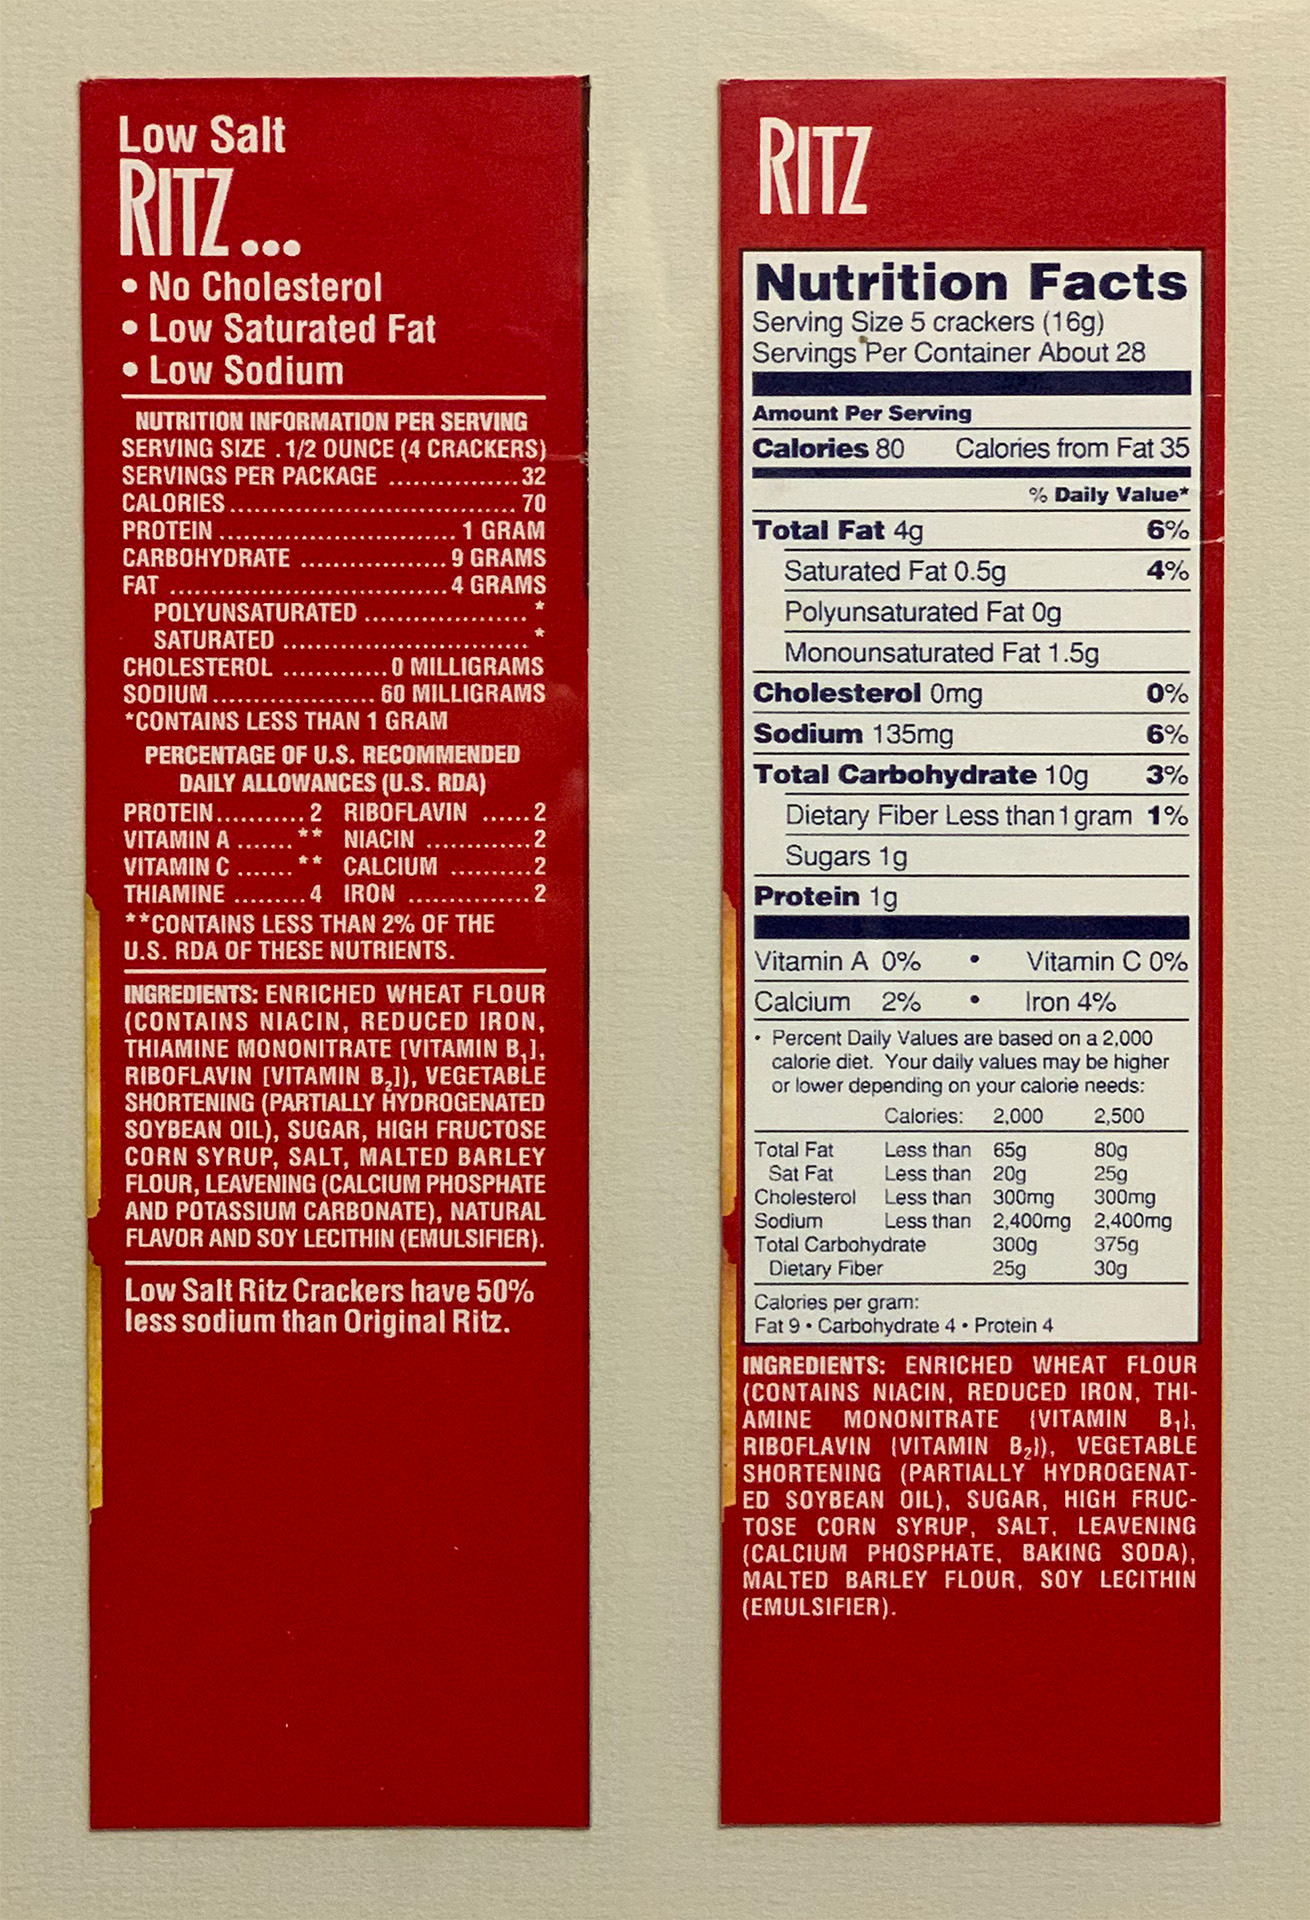 Ritz Crackers original Nutritional label vs New, familiar design